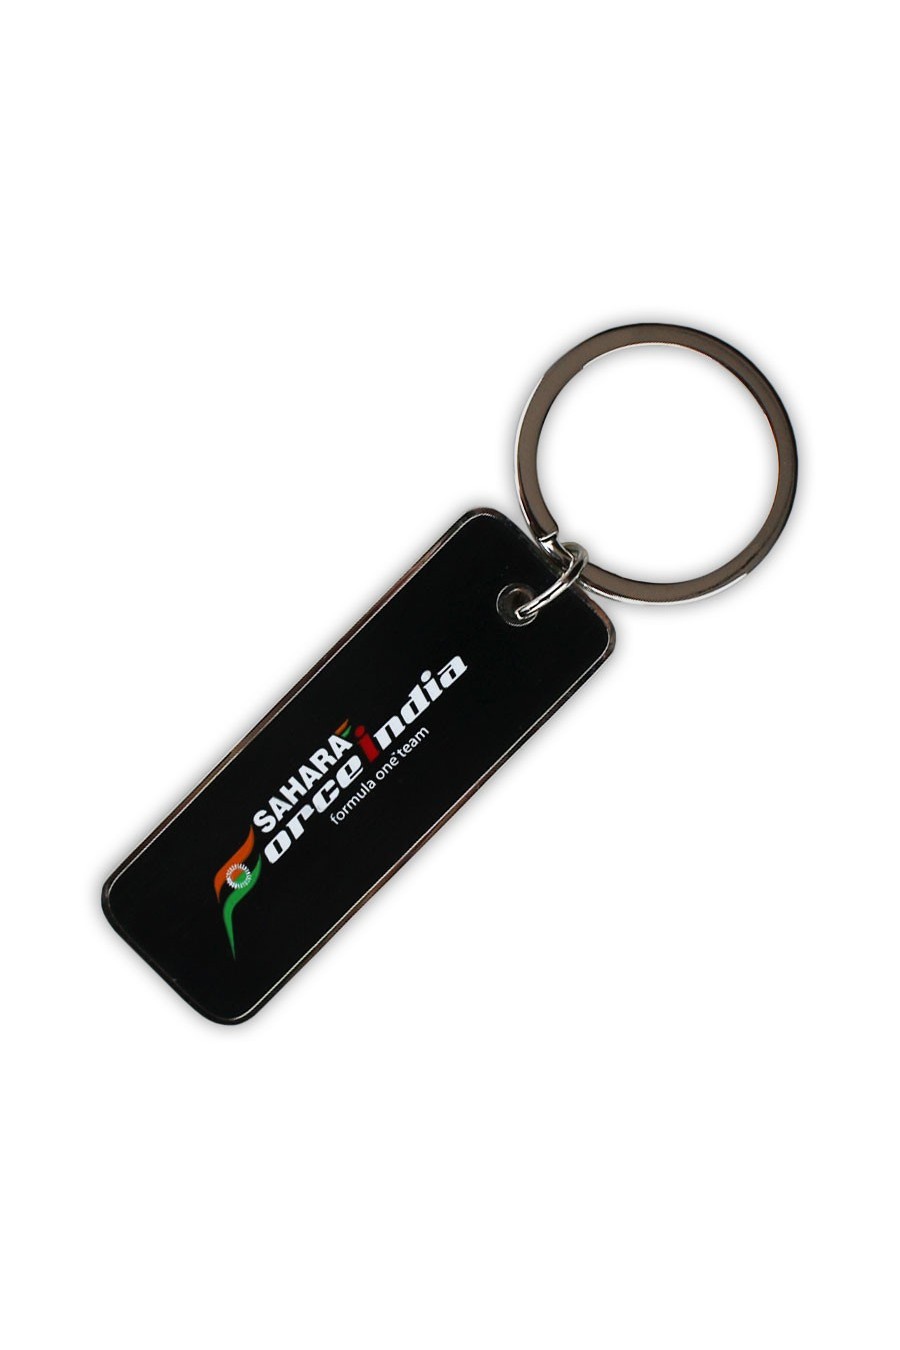 Sahara Force India Schlüsselanhänger